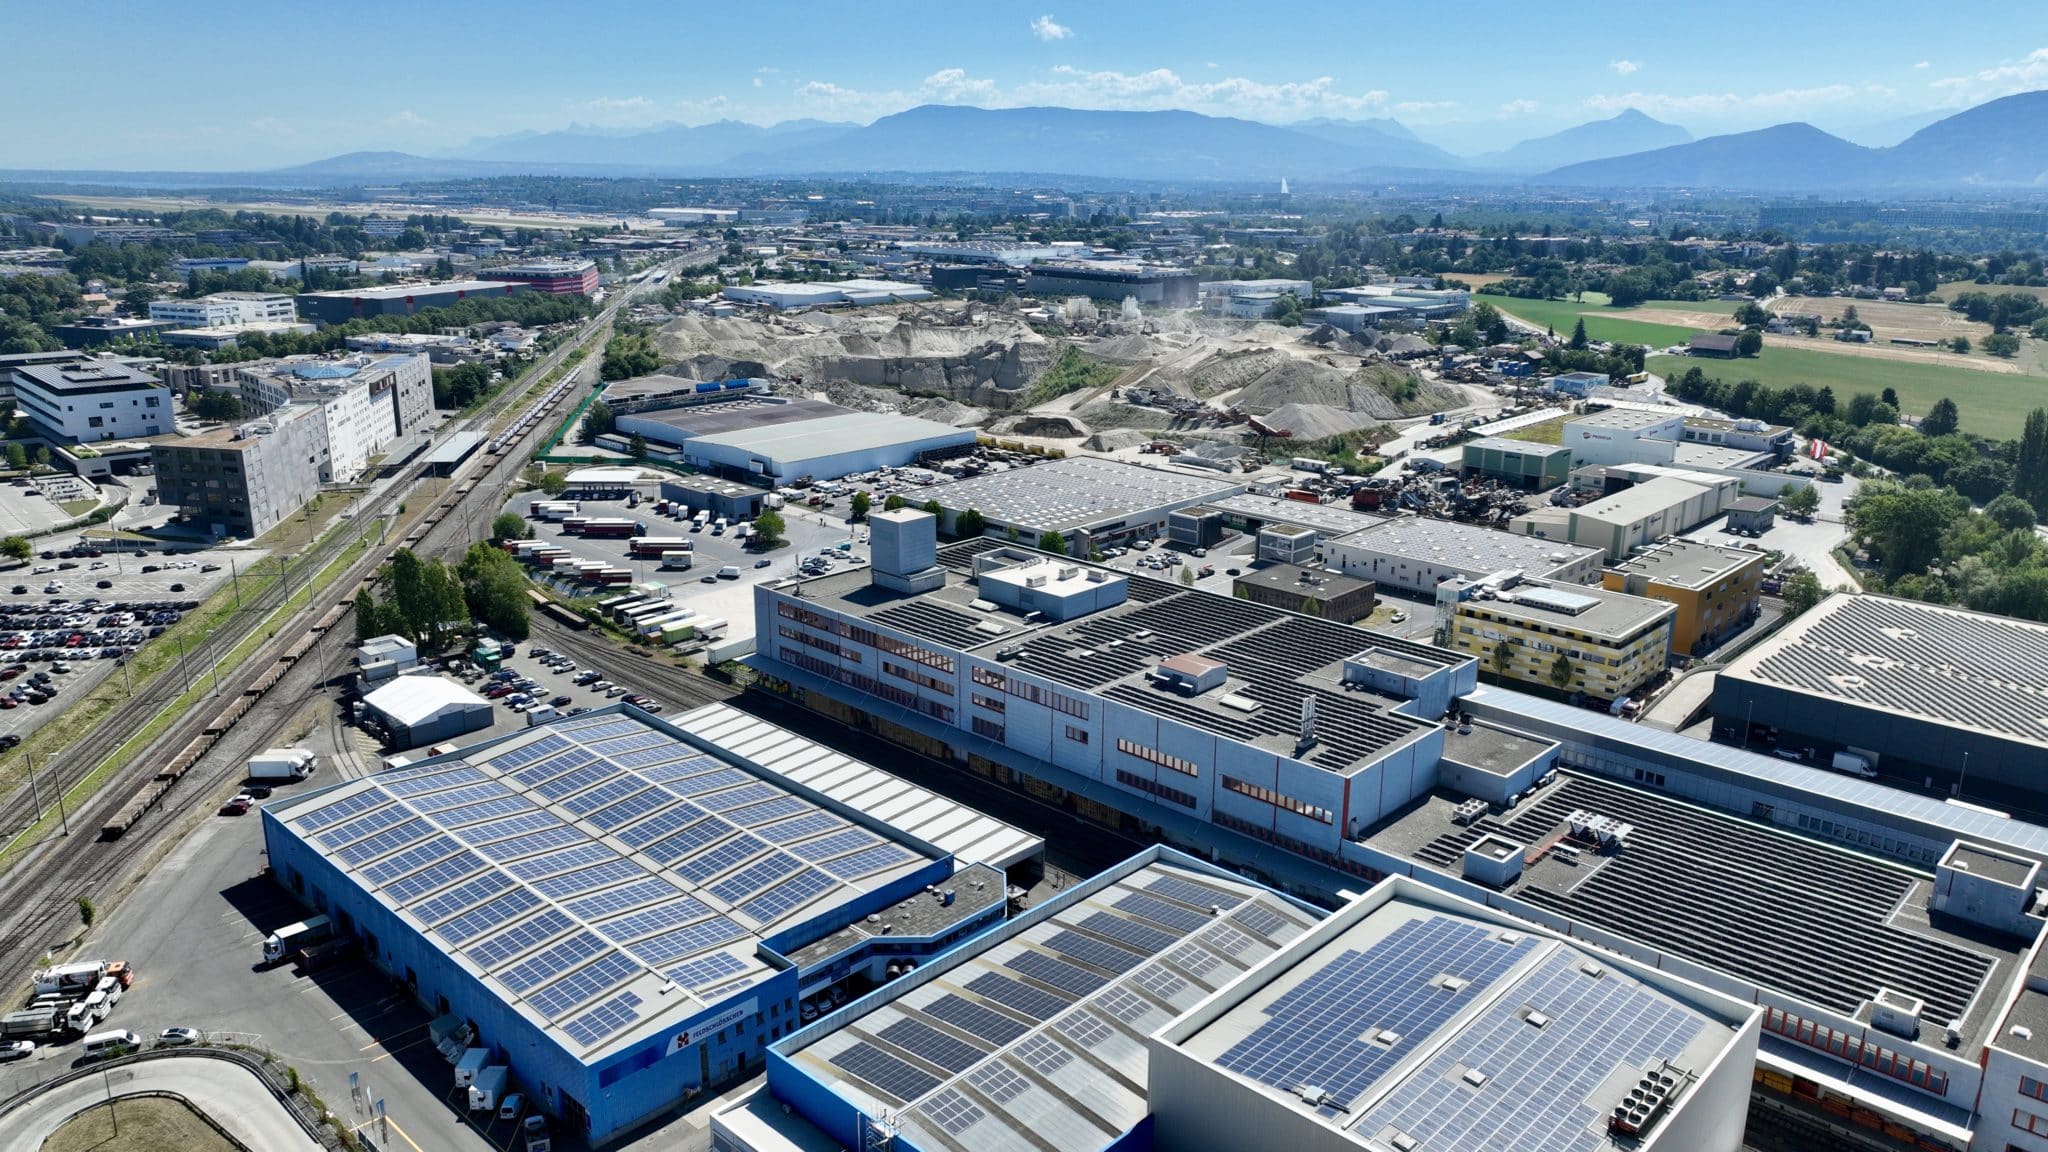 Vue aérienne de la zone industrielle de Meyrin-Satigny. Photo : Olivier Riethauser